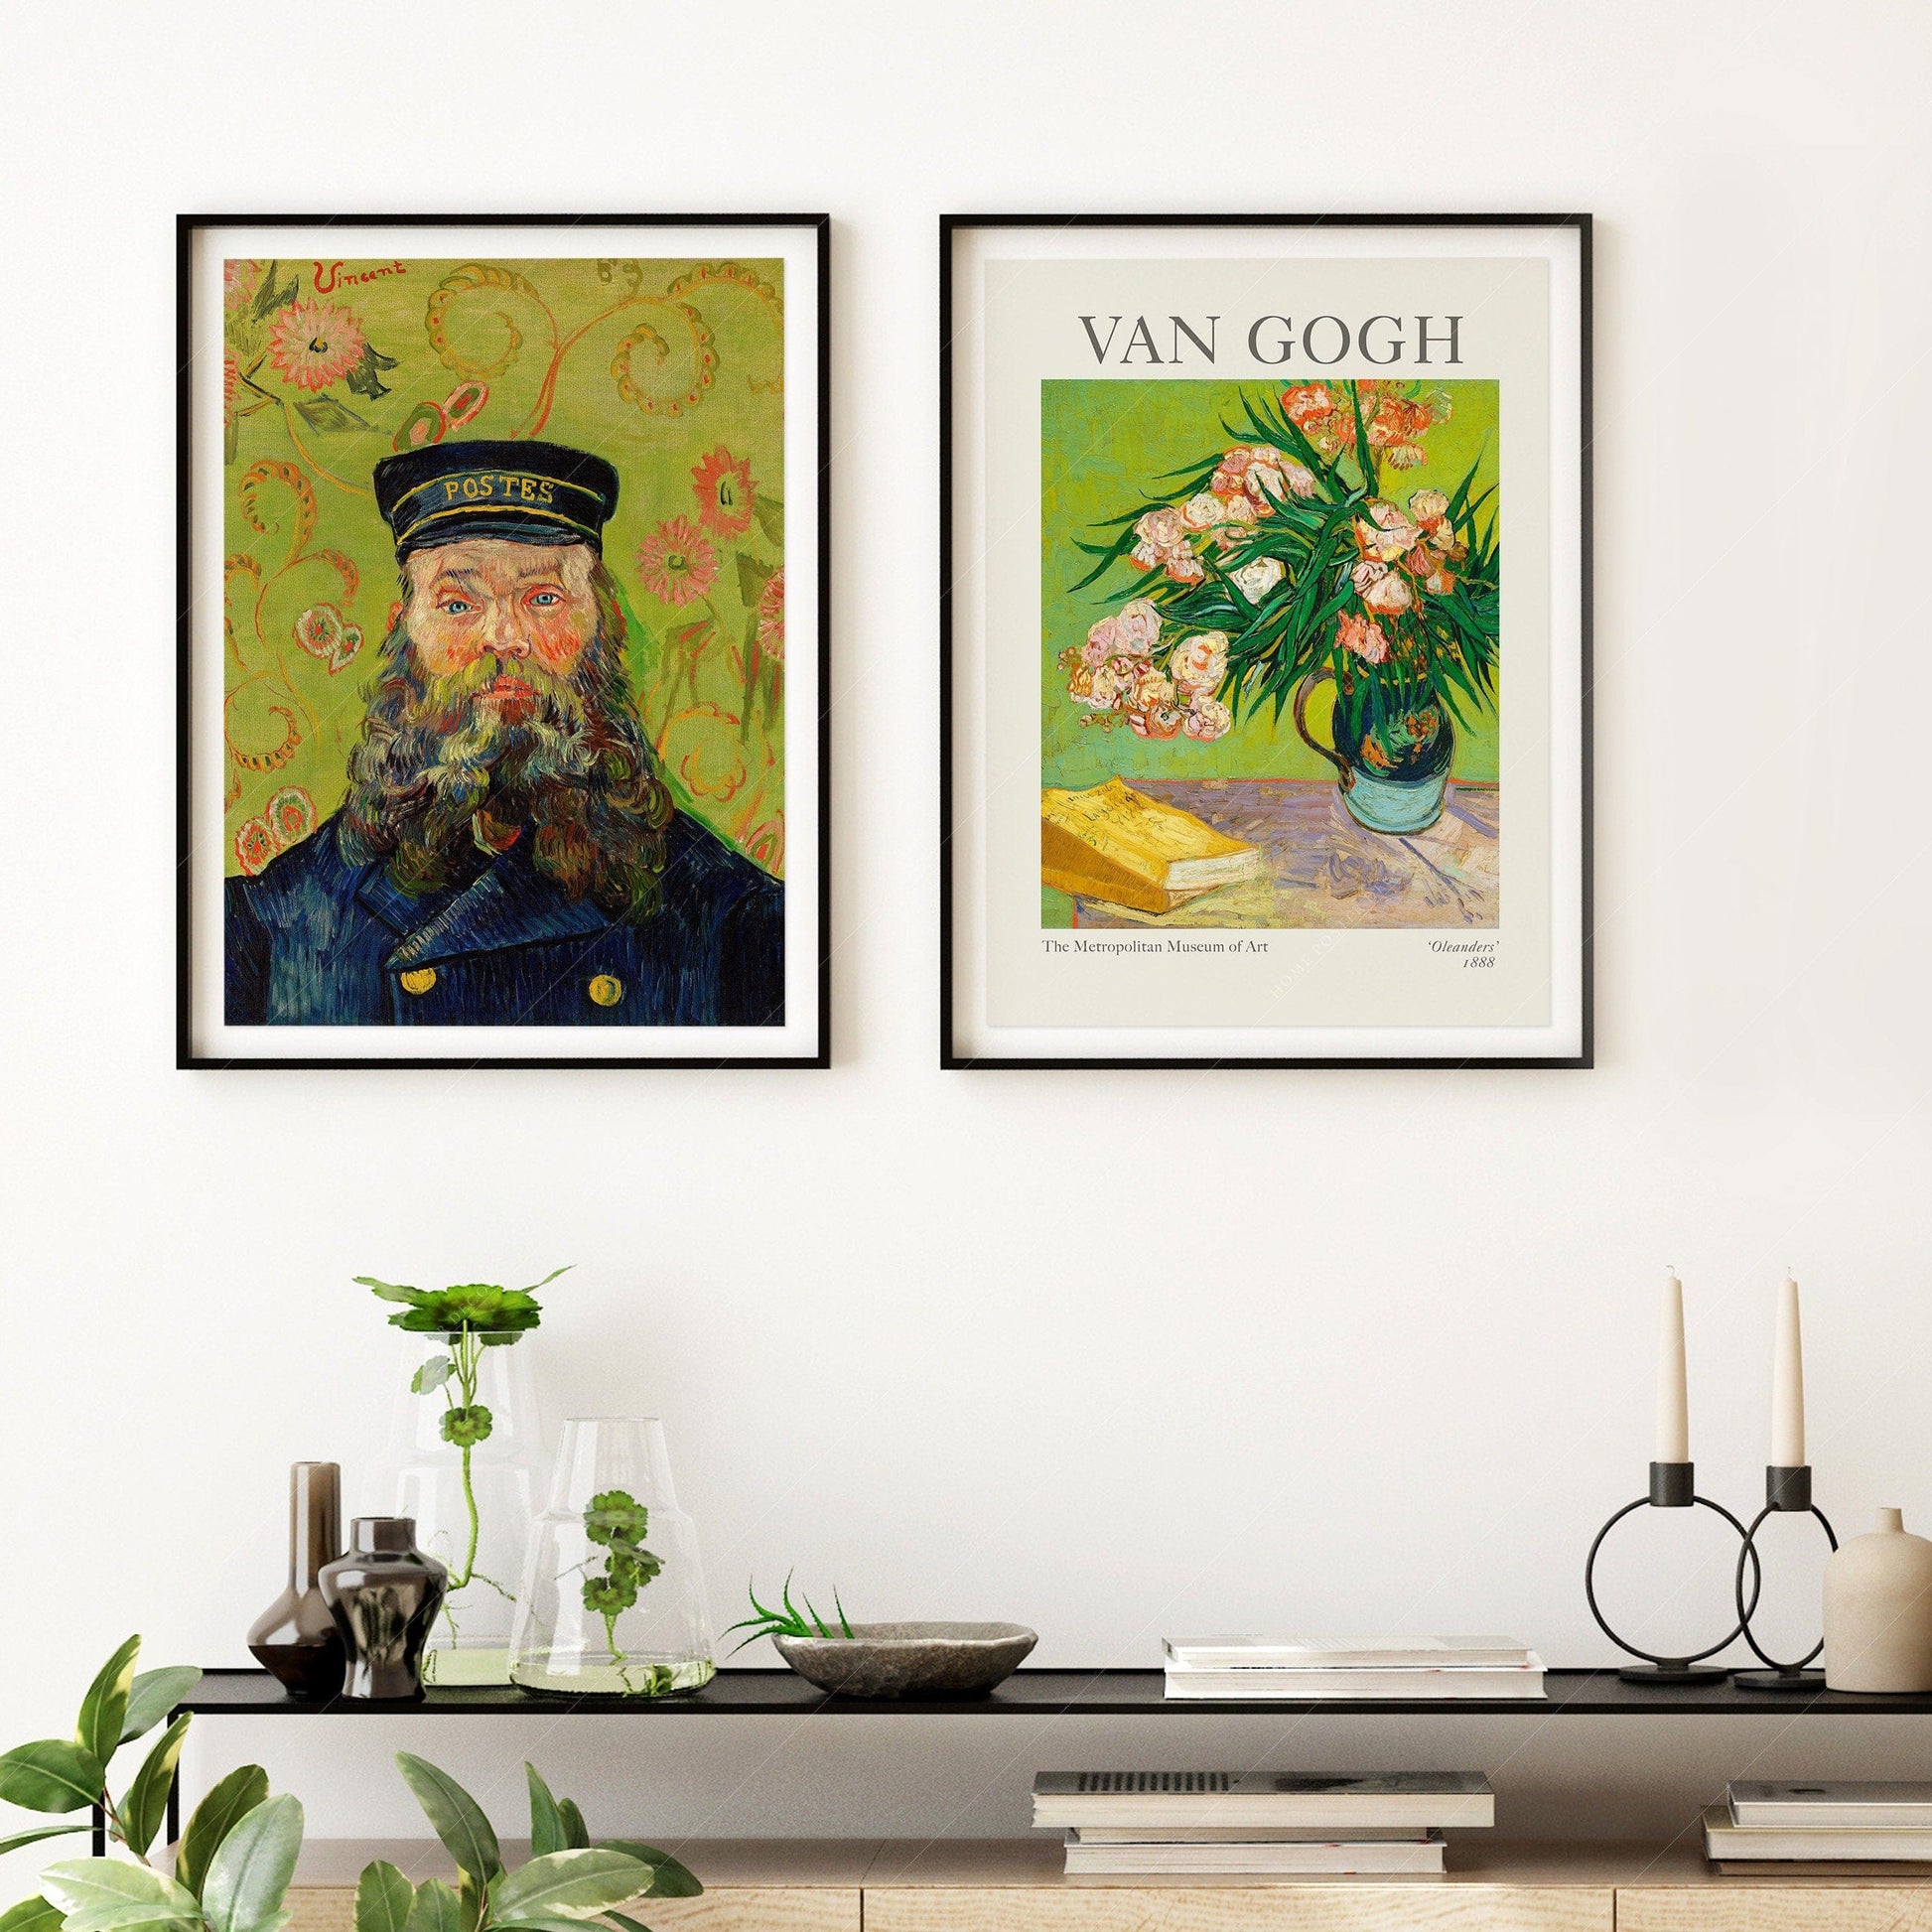 Home Poster Decor Set of 2 Van Gogh print set of 2, Van Gogh Exhibition Poster, Van Gogh Painting, Van Gogh Wall Art, Living Wall Decor, Gift Idea, Office Wall Decor